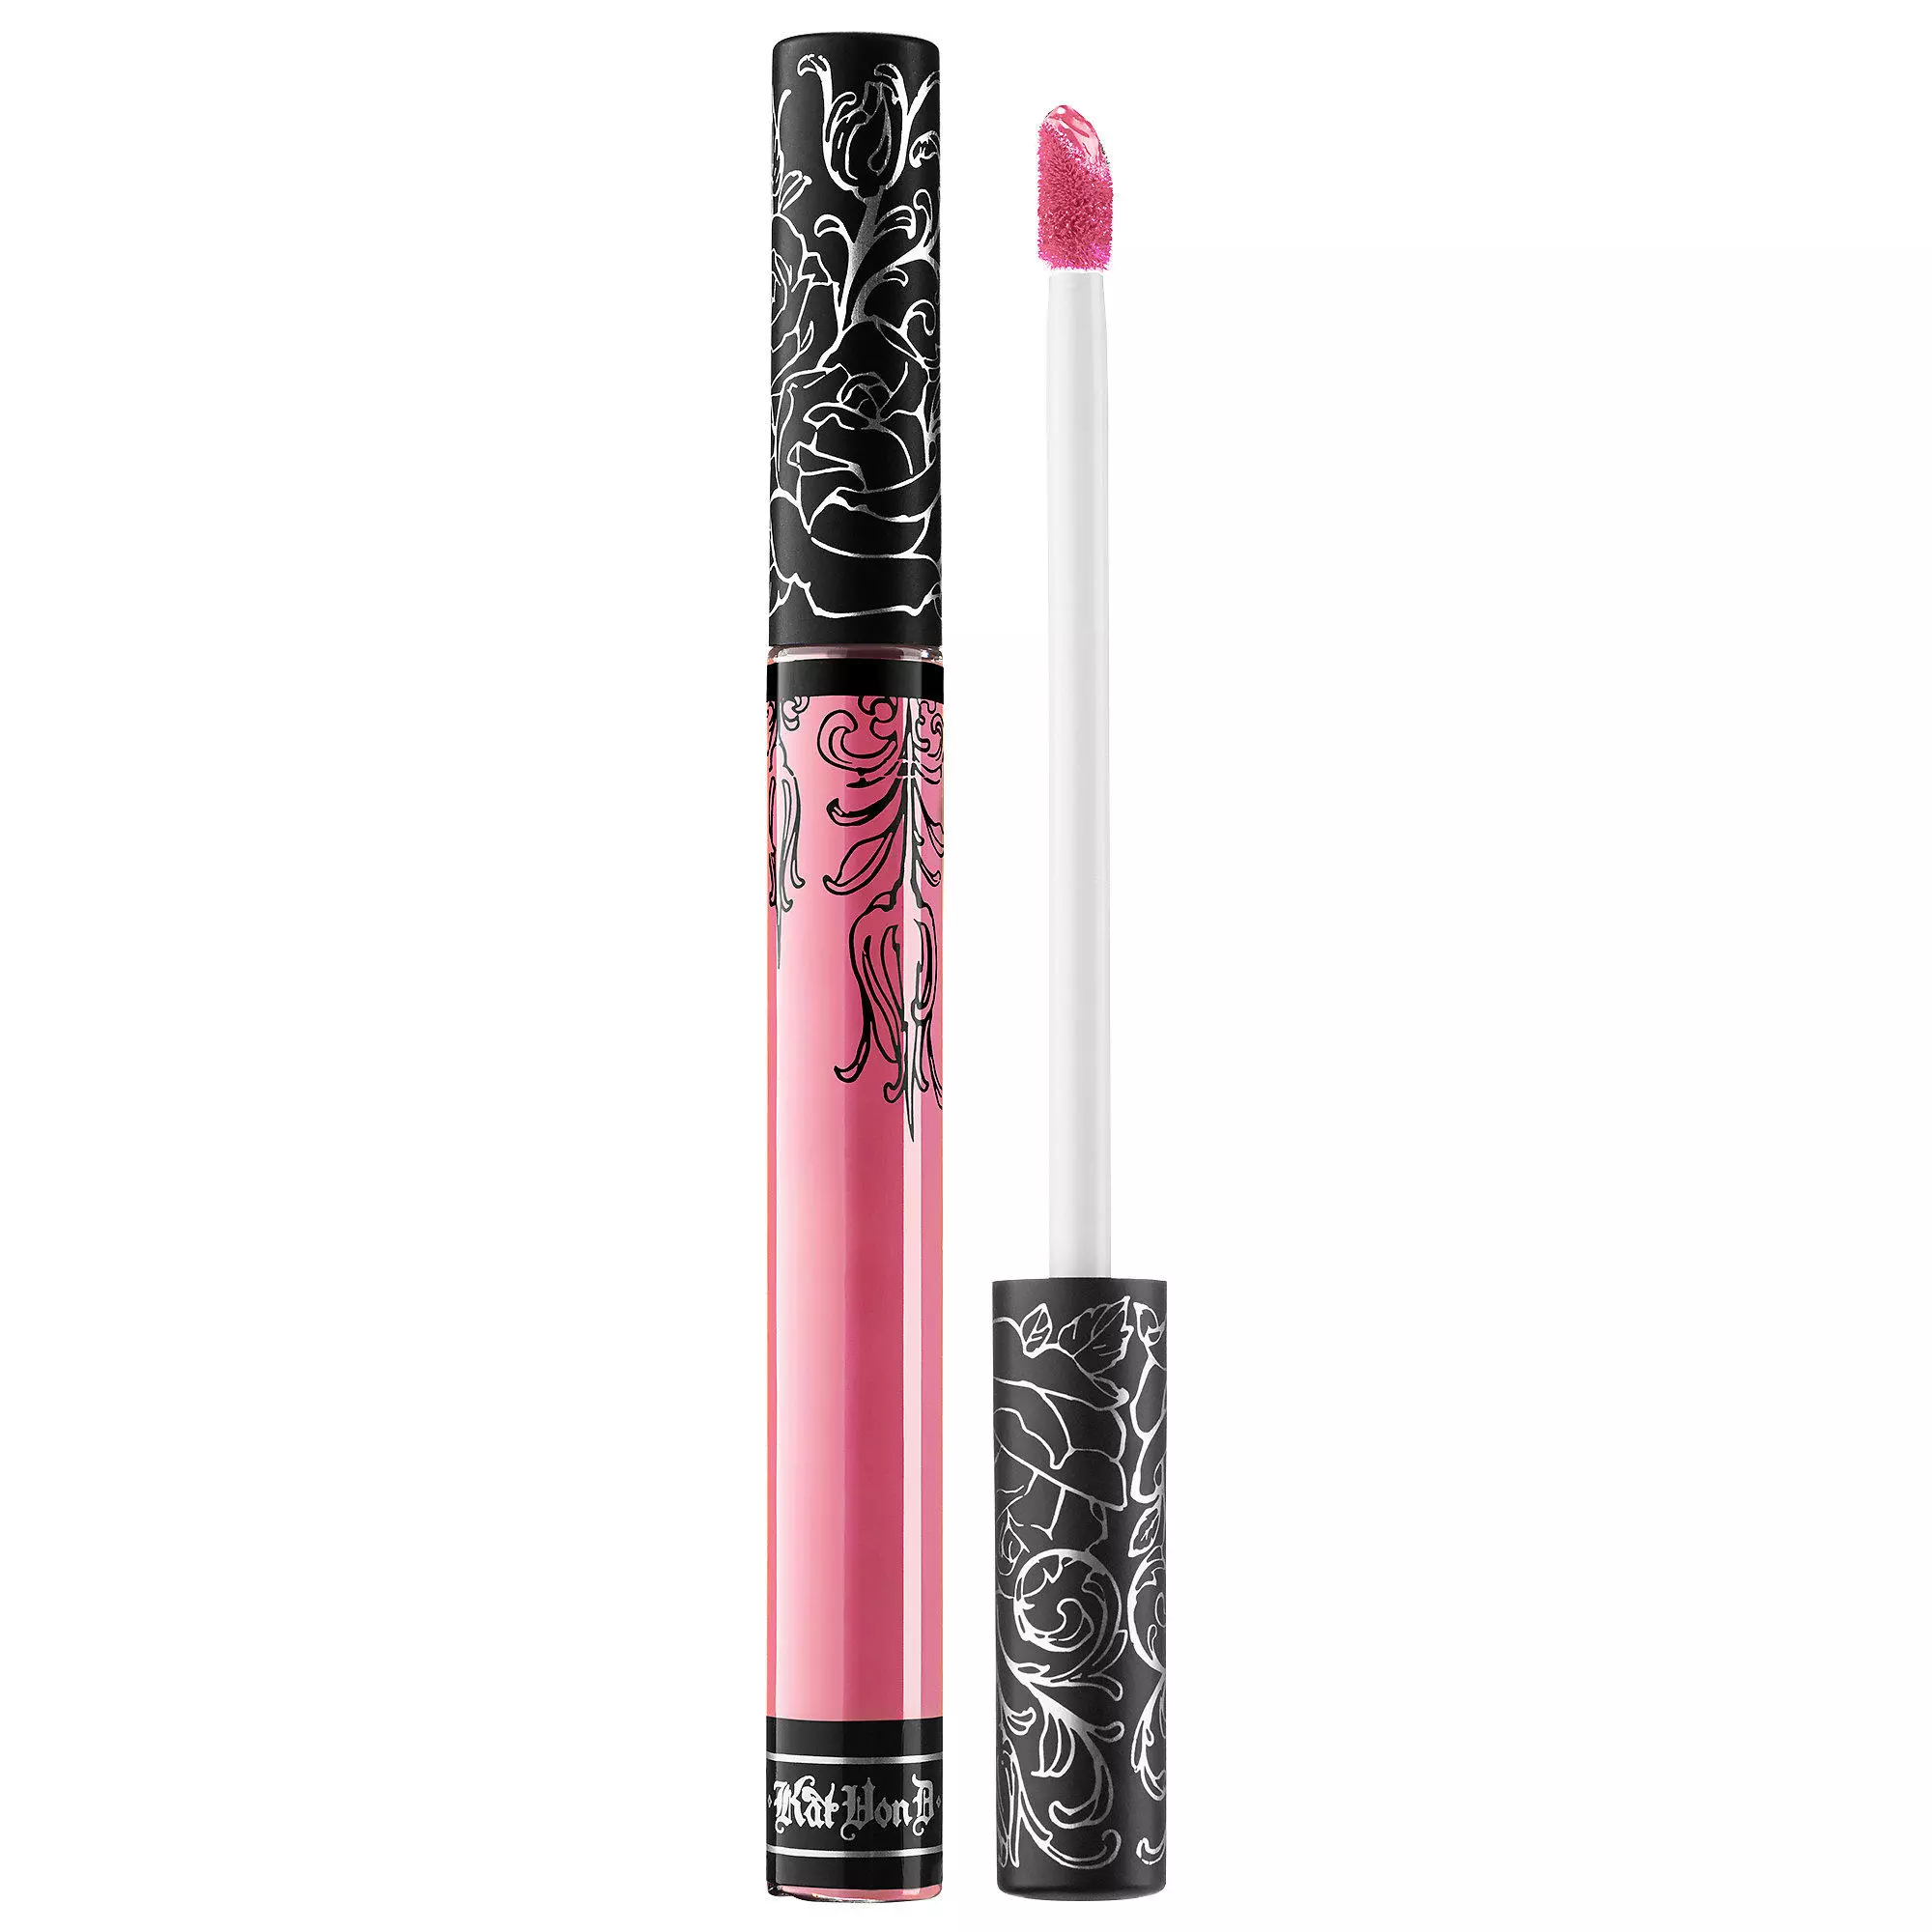 Kat D Everlasting Liquid Lipstick Mother Mini | Glambot.com - Best deals on Kat Von D cosmetics